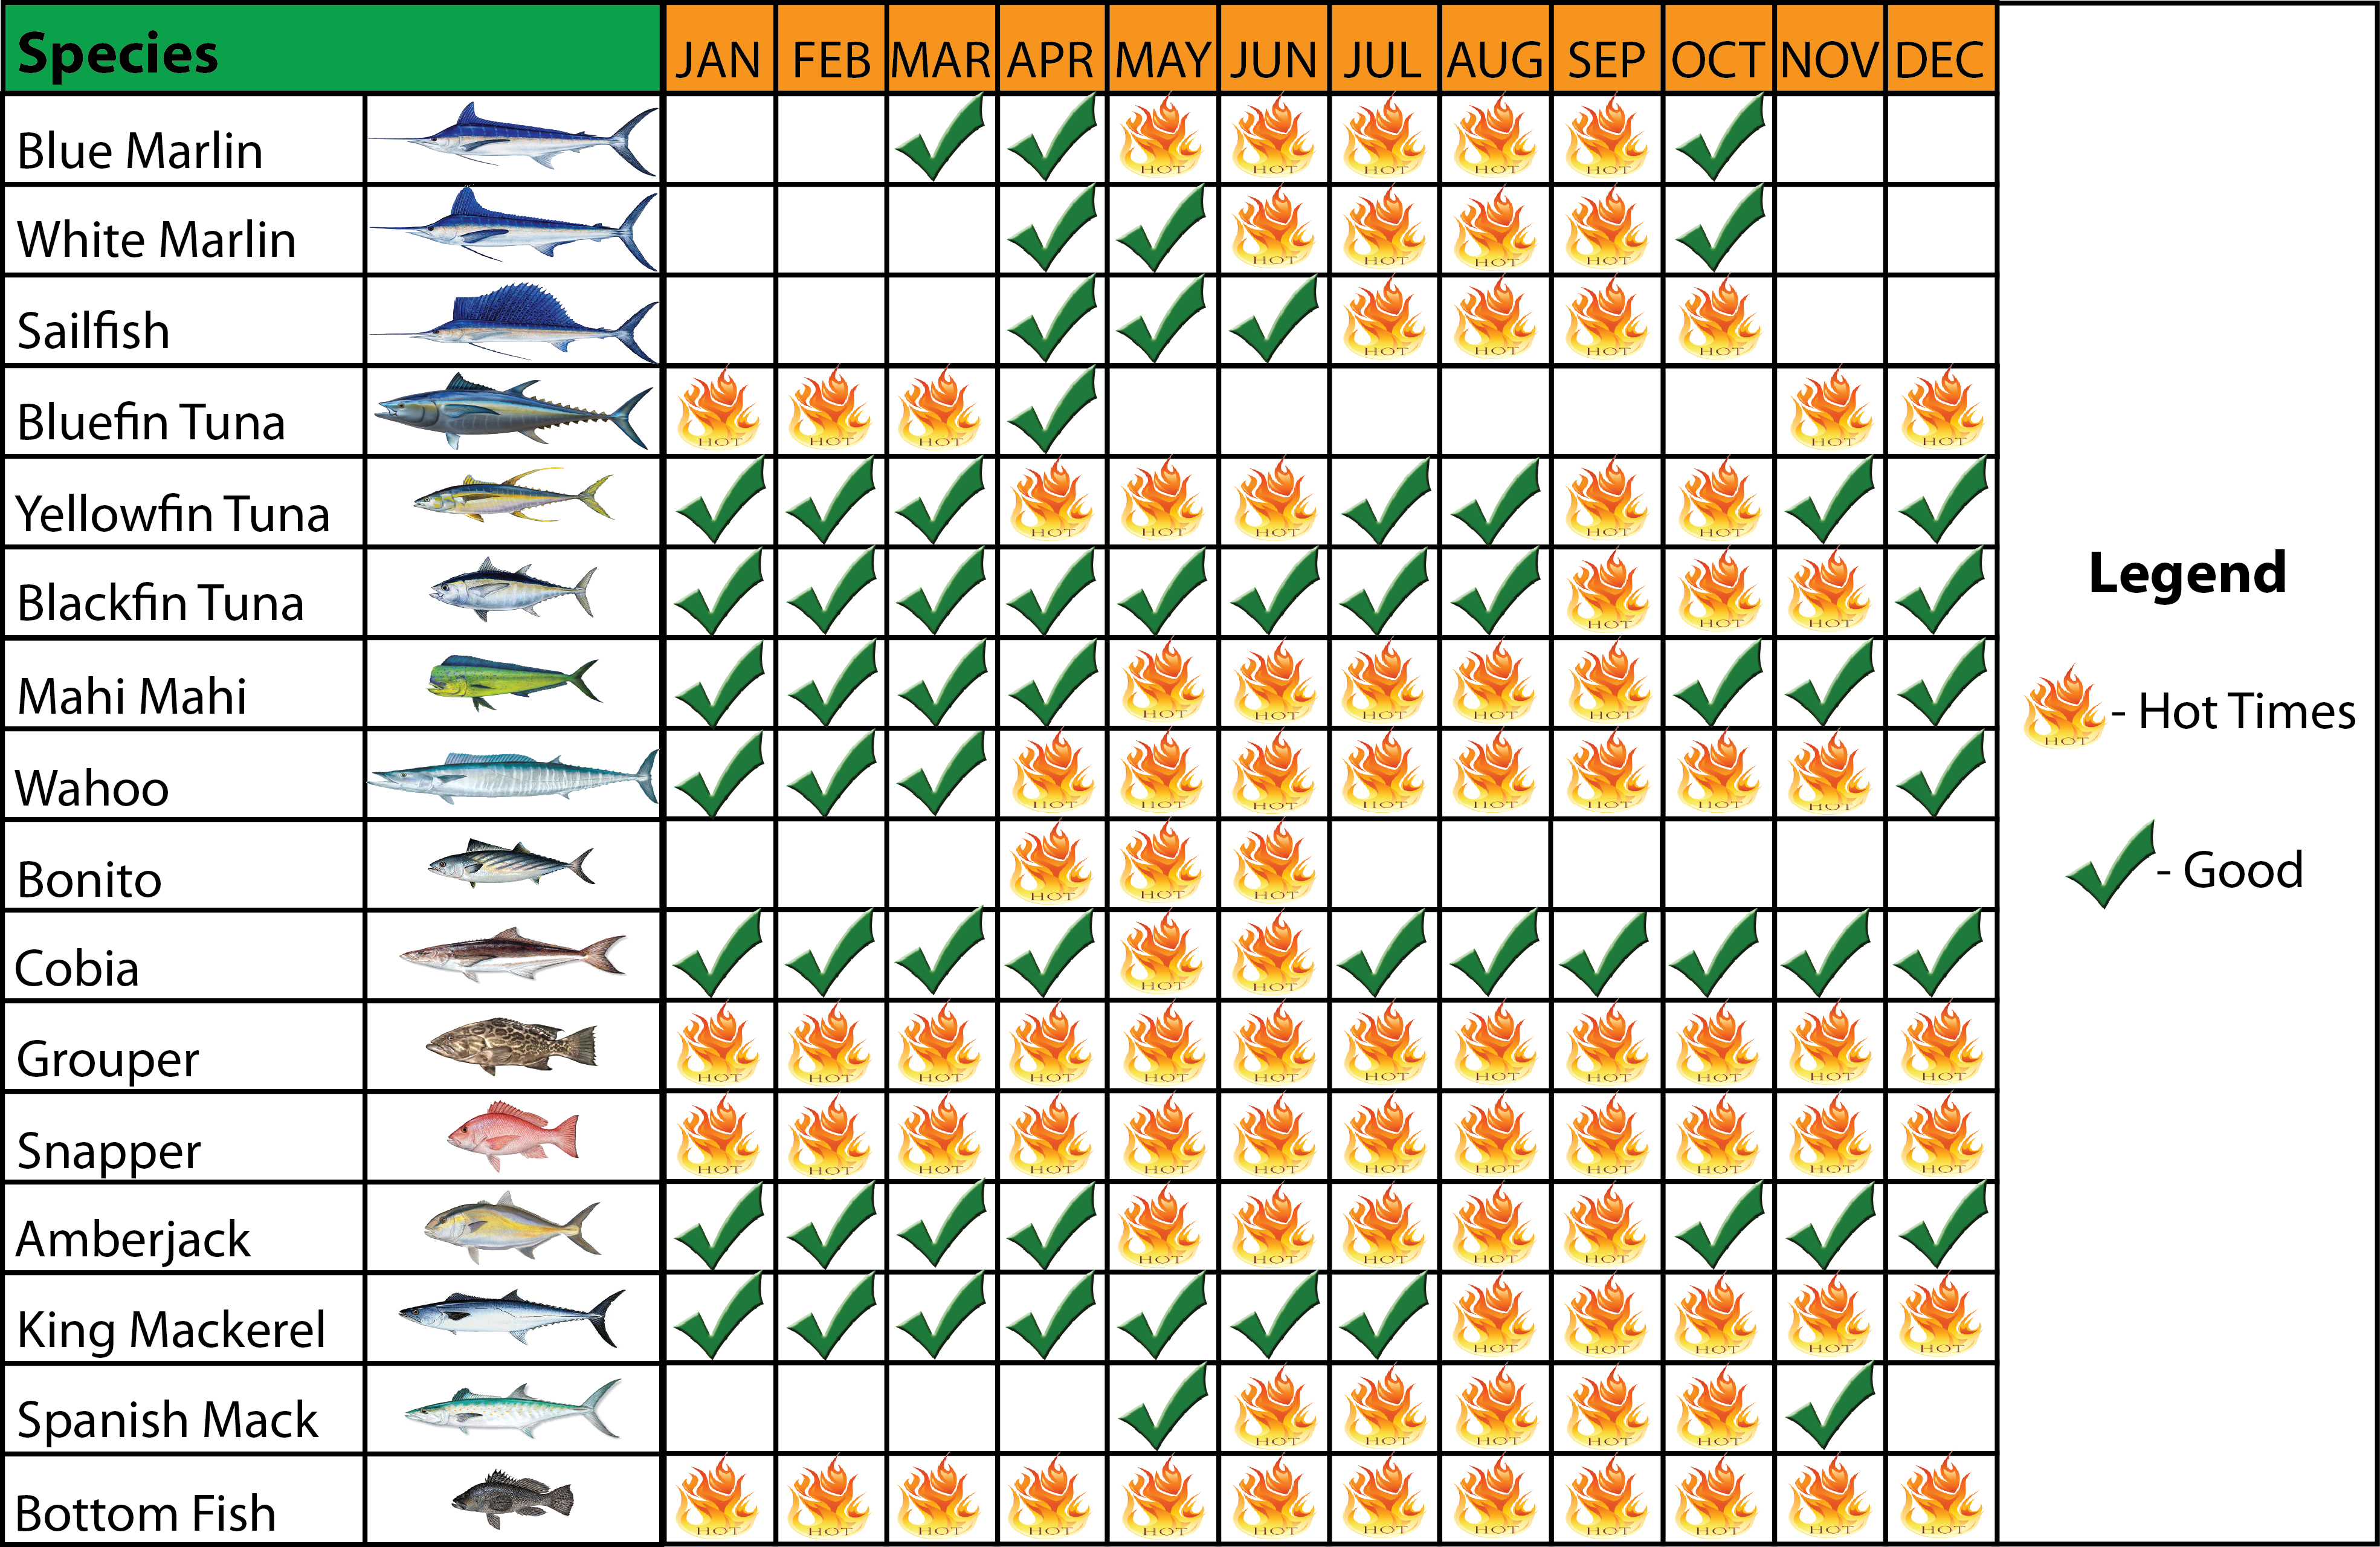 Клев на дону на неделю. Календарь рыбака. Таблица рыбной ловли. Таблица клева рыбы. Календарь ловли рыбы.